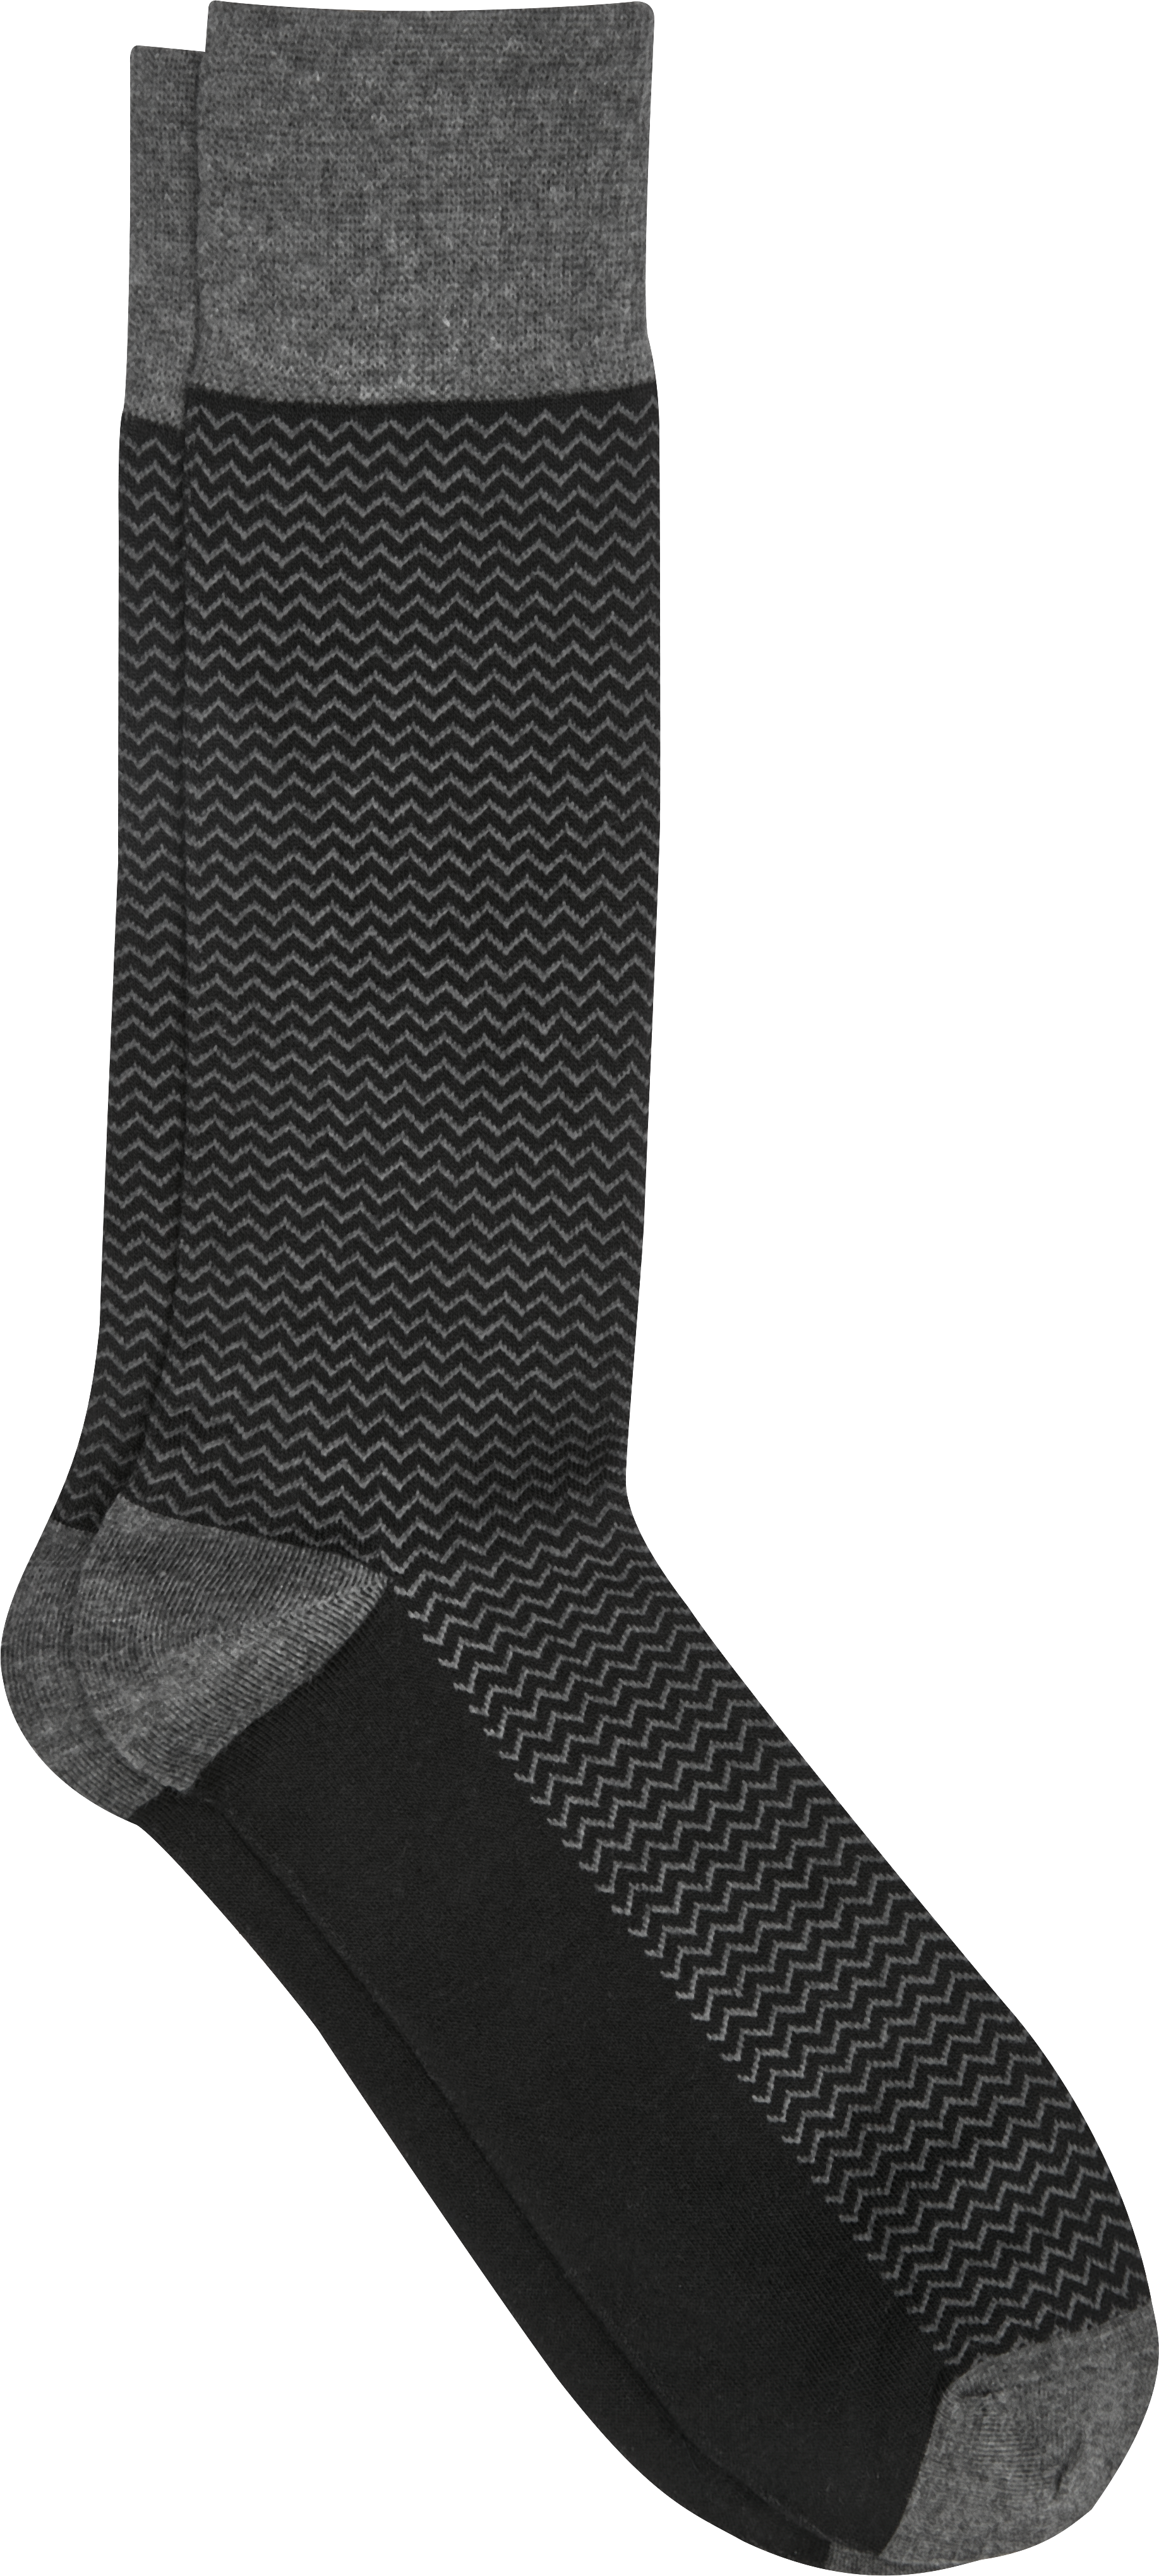 Pronto Uomo Socks, Gray Tonal Chevron - Men's Accessories | Men's Wearhouse